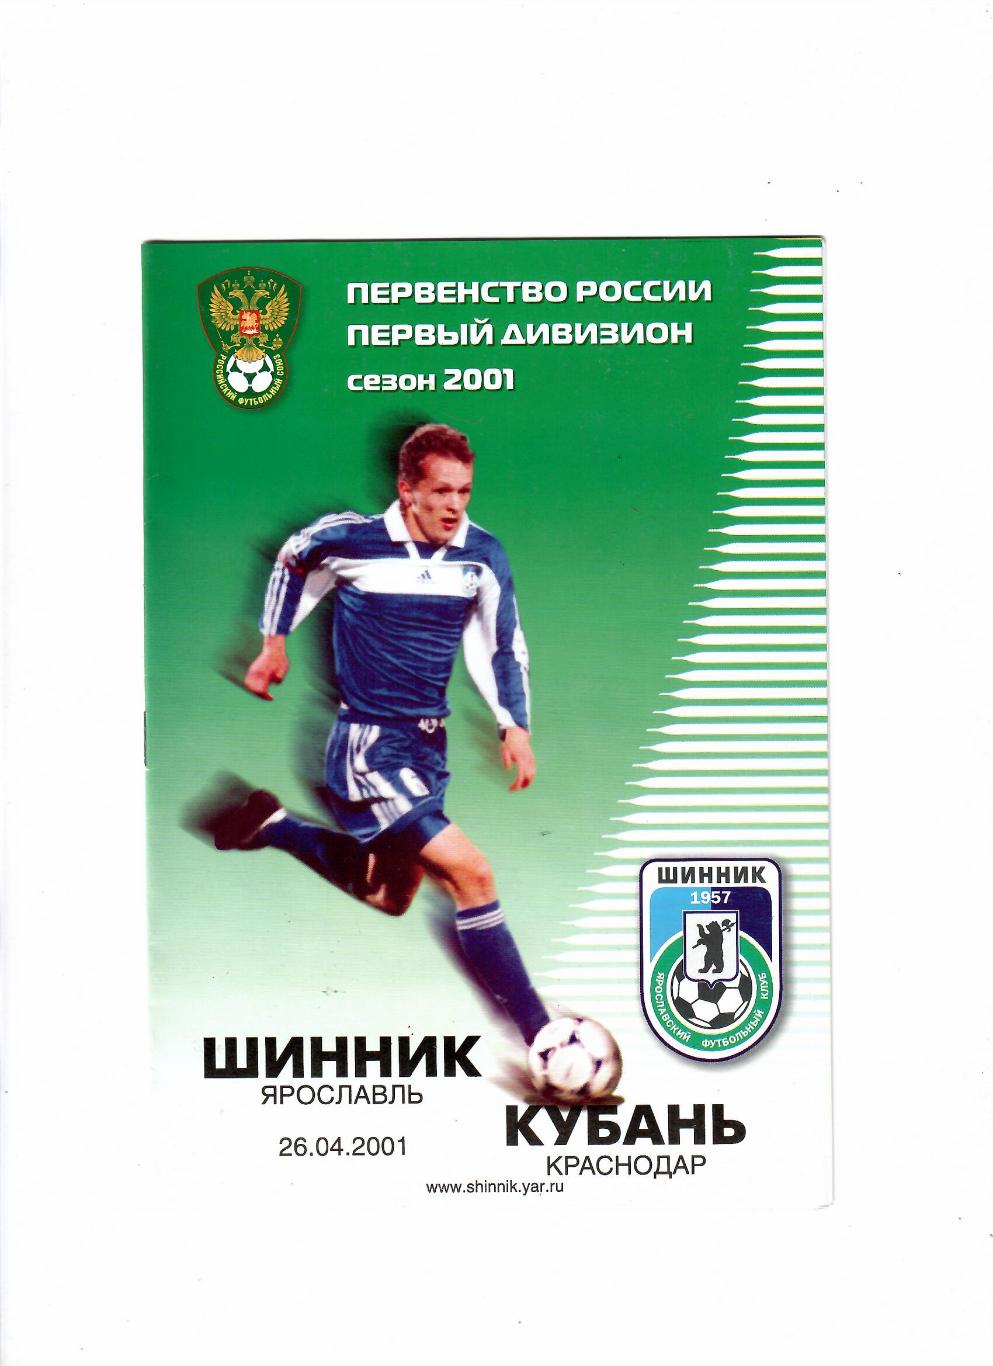 Шинник Ярославль-Кубань Краснодар 2001